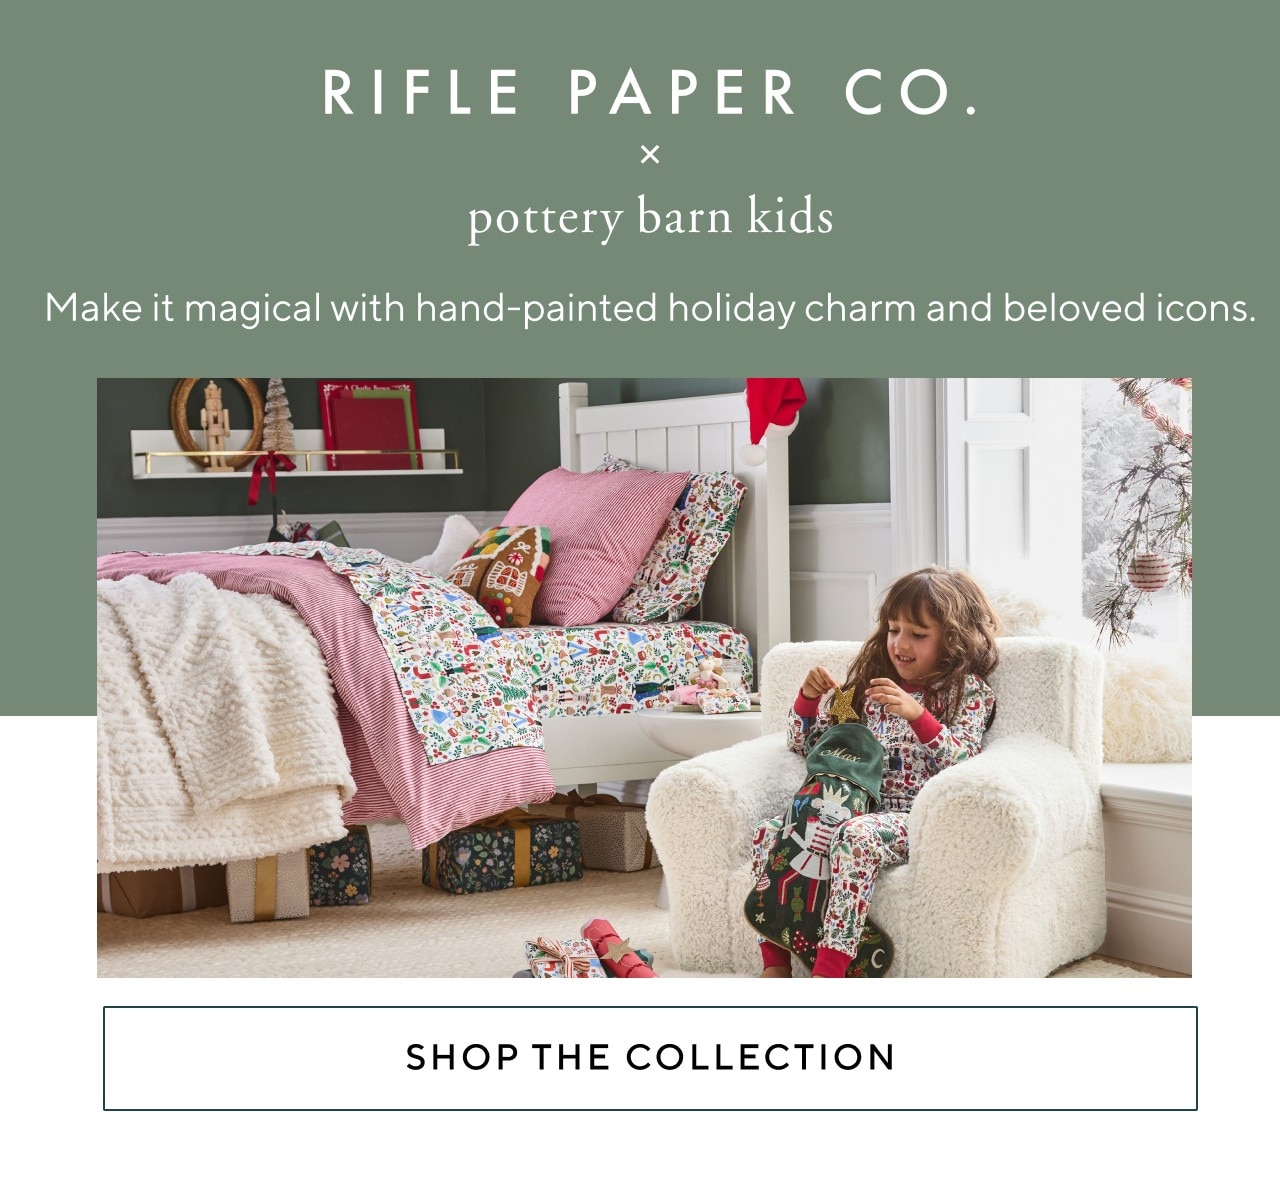 RIFLE PAPER CO. X POTTERY BARN KIDS